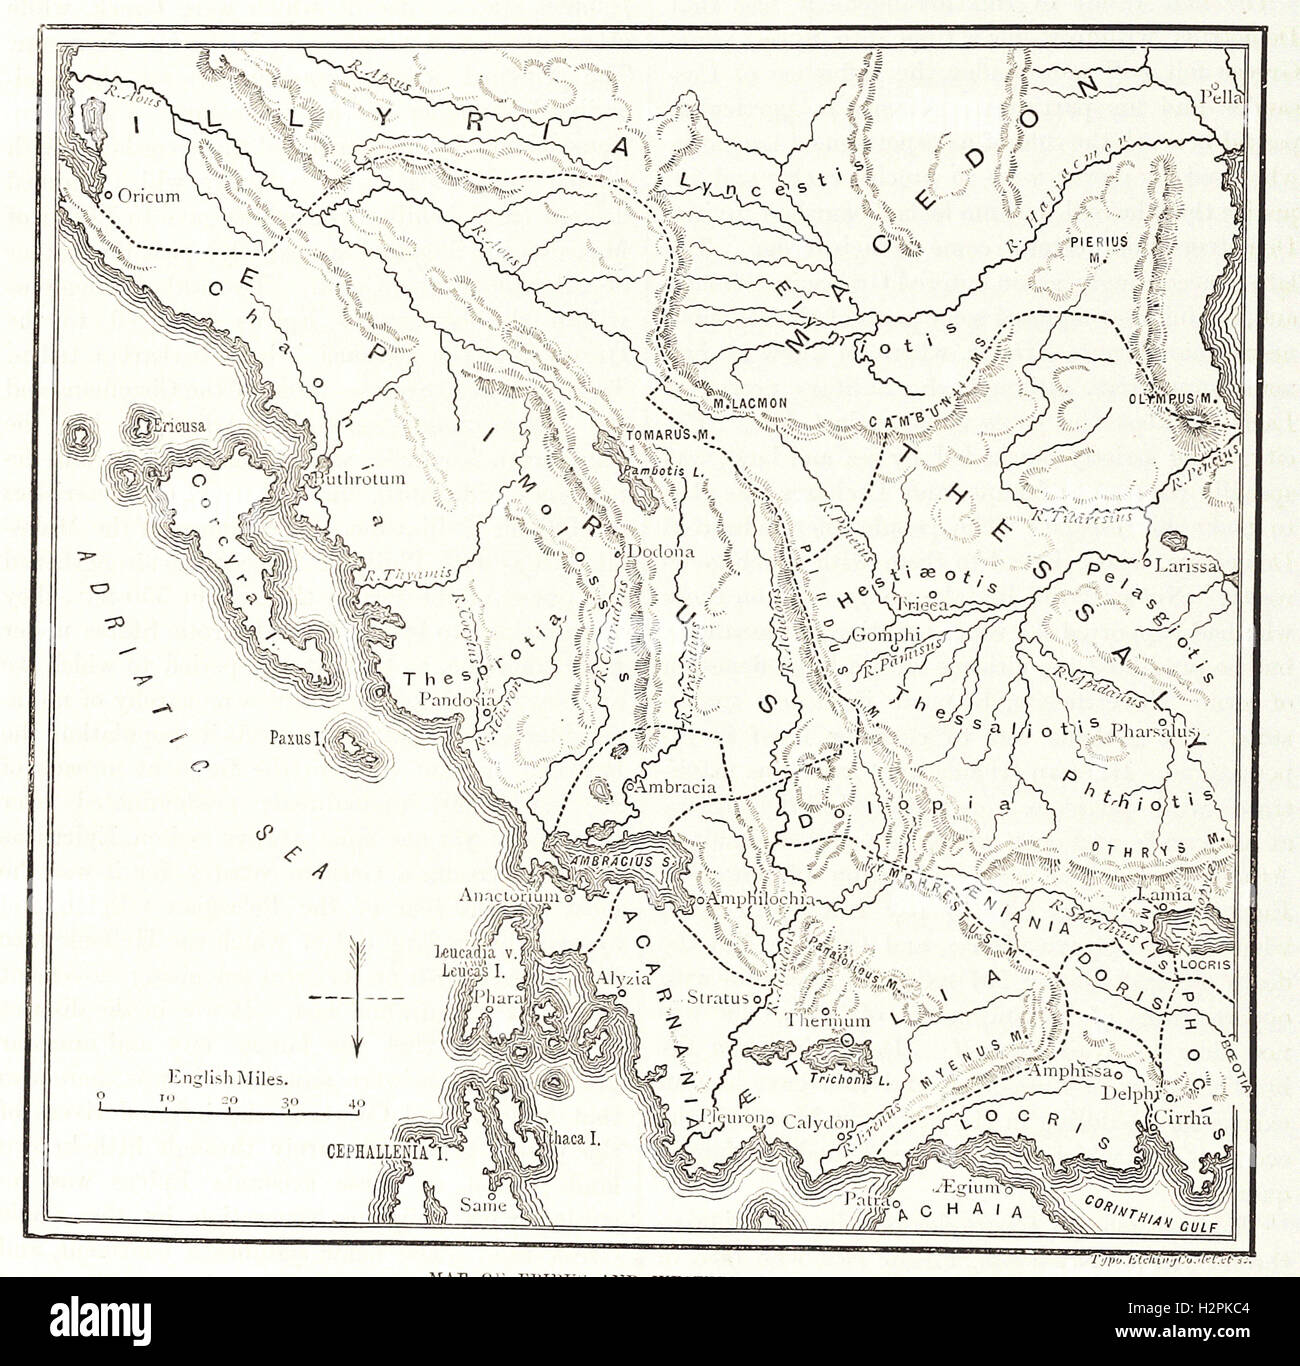 Mapa de Epiro y Grecia occidental. - Desde 'Cassell's ilustra la historia universal' - 1882 Foto de stock